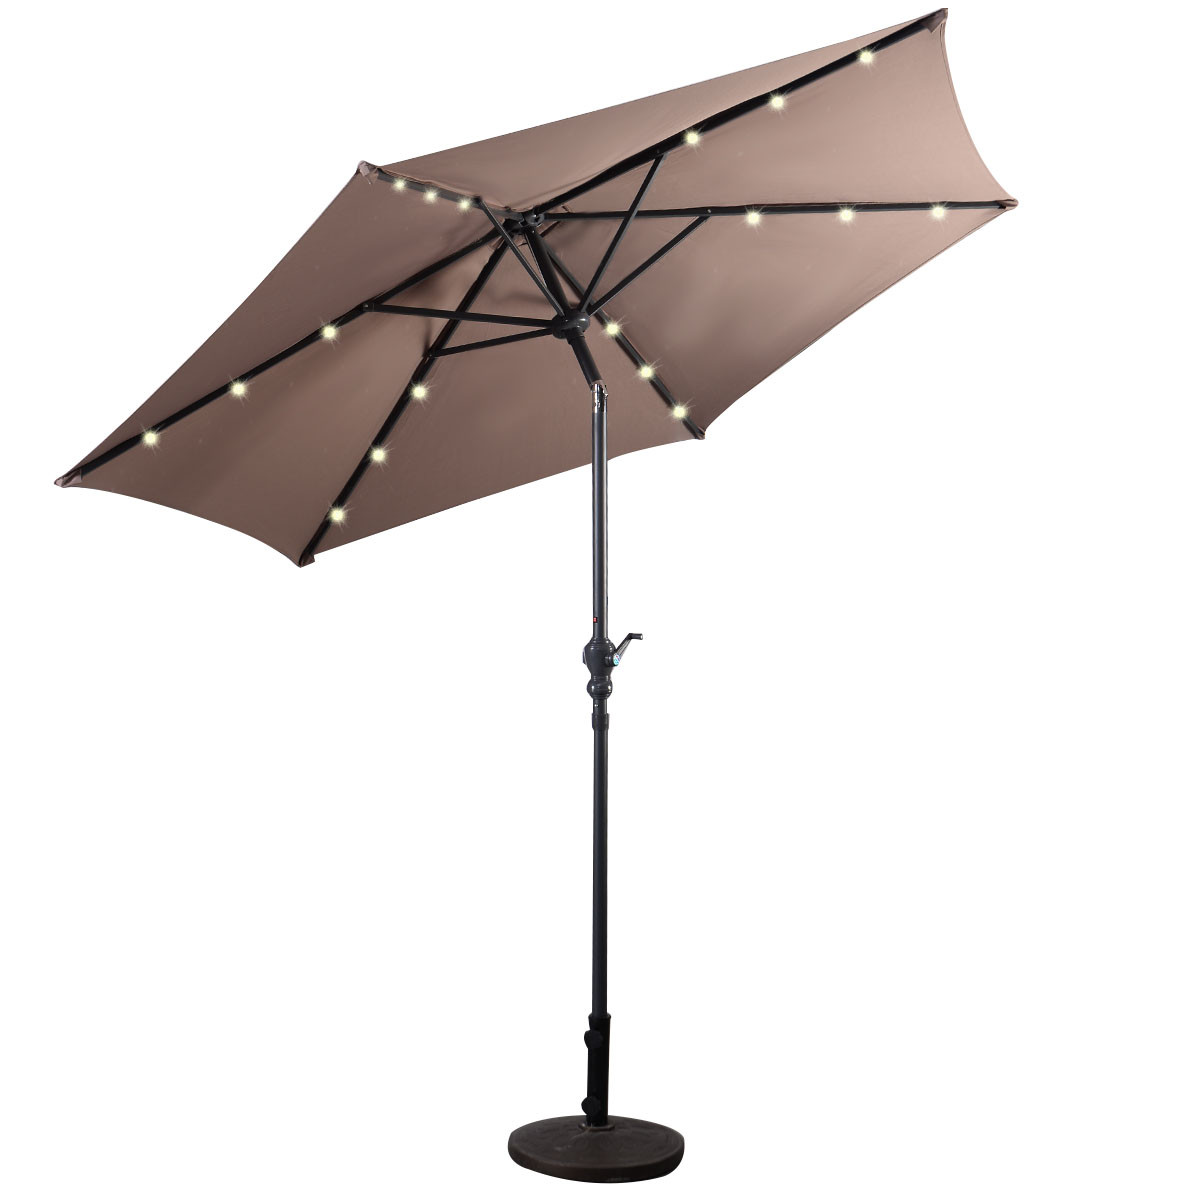 Best ideas about Walmart Patio Umbrella
. Save or Pin Trademark Innovations 10 x 6 5 Rectangular Solar Powered Now.